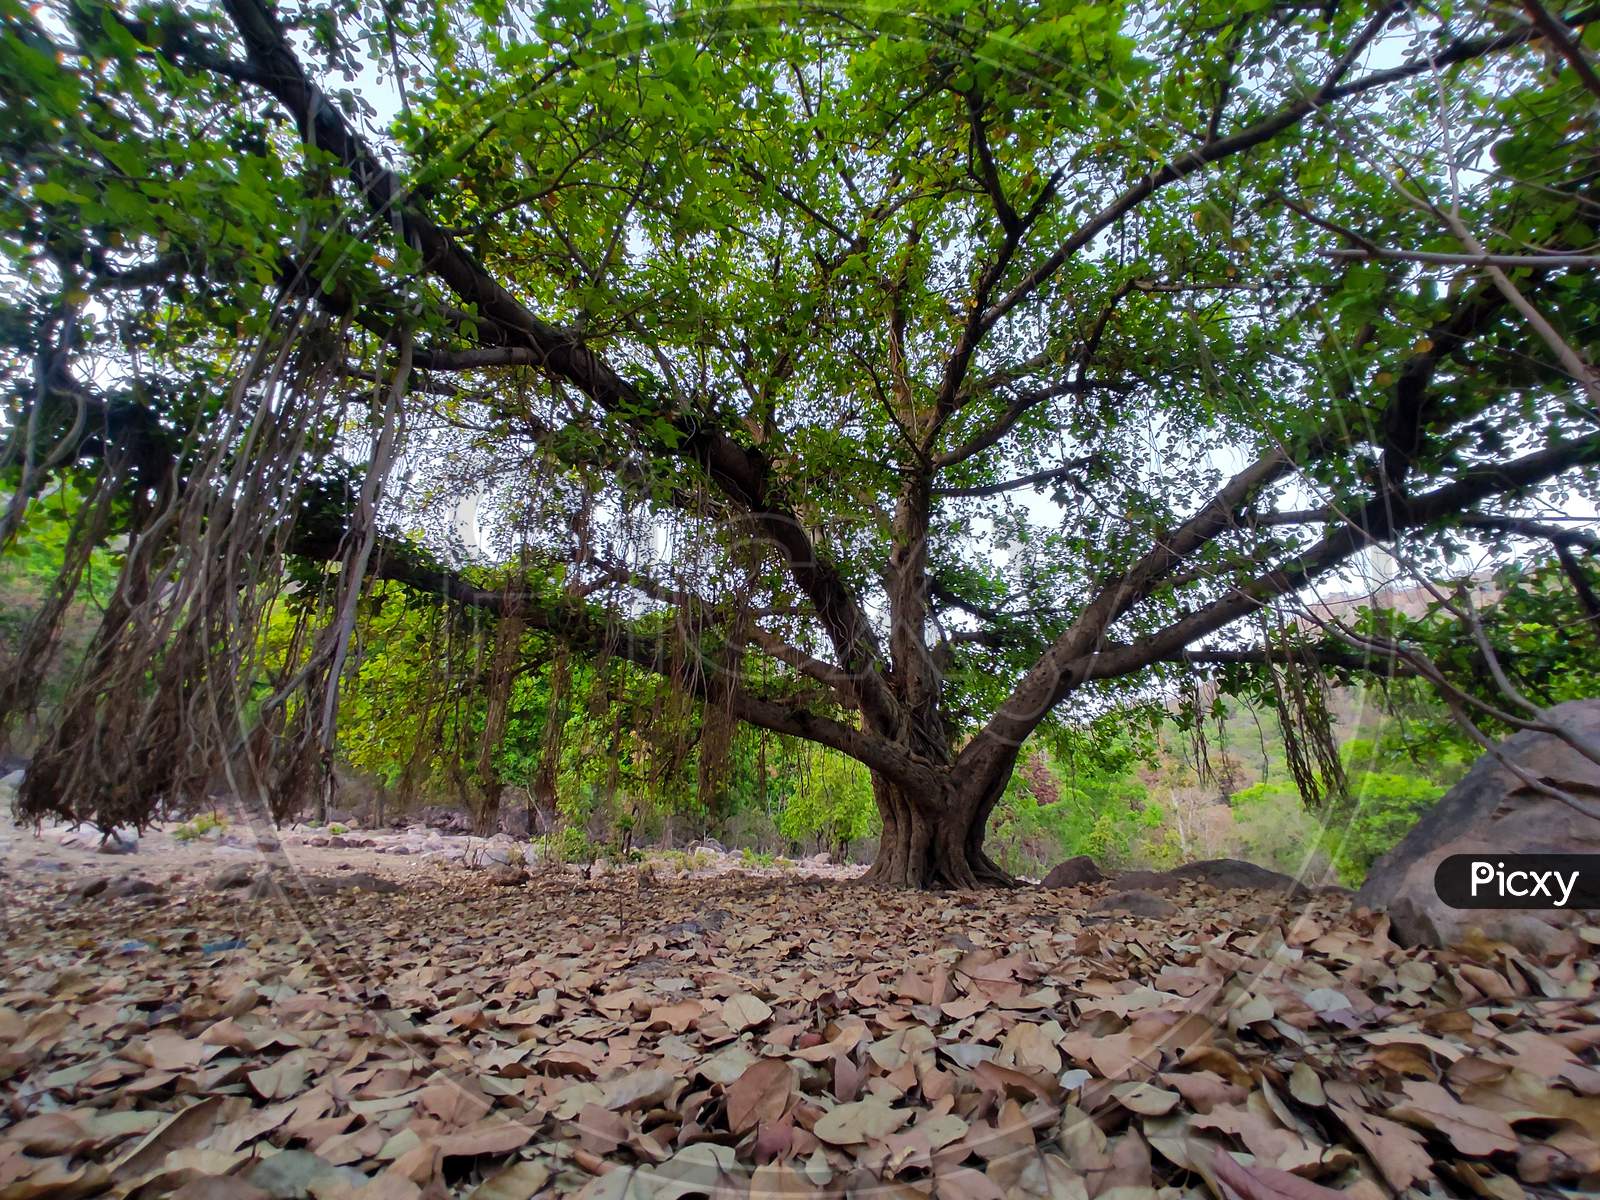 Wide angle shot of banayan tree with long vines